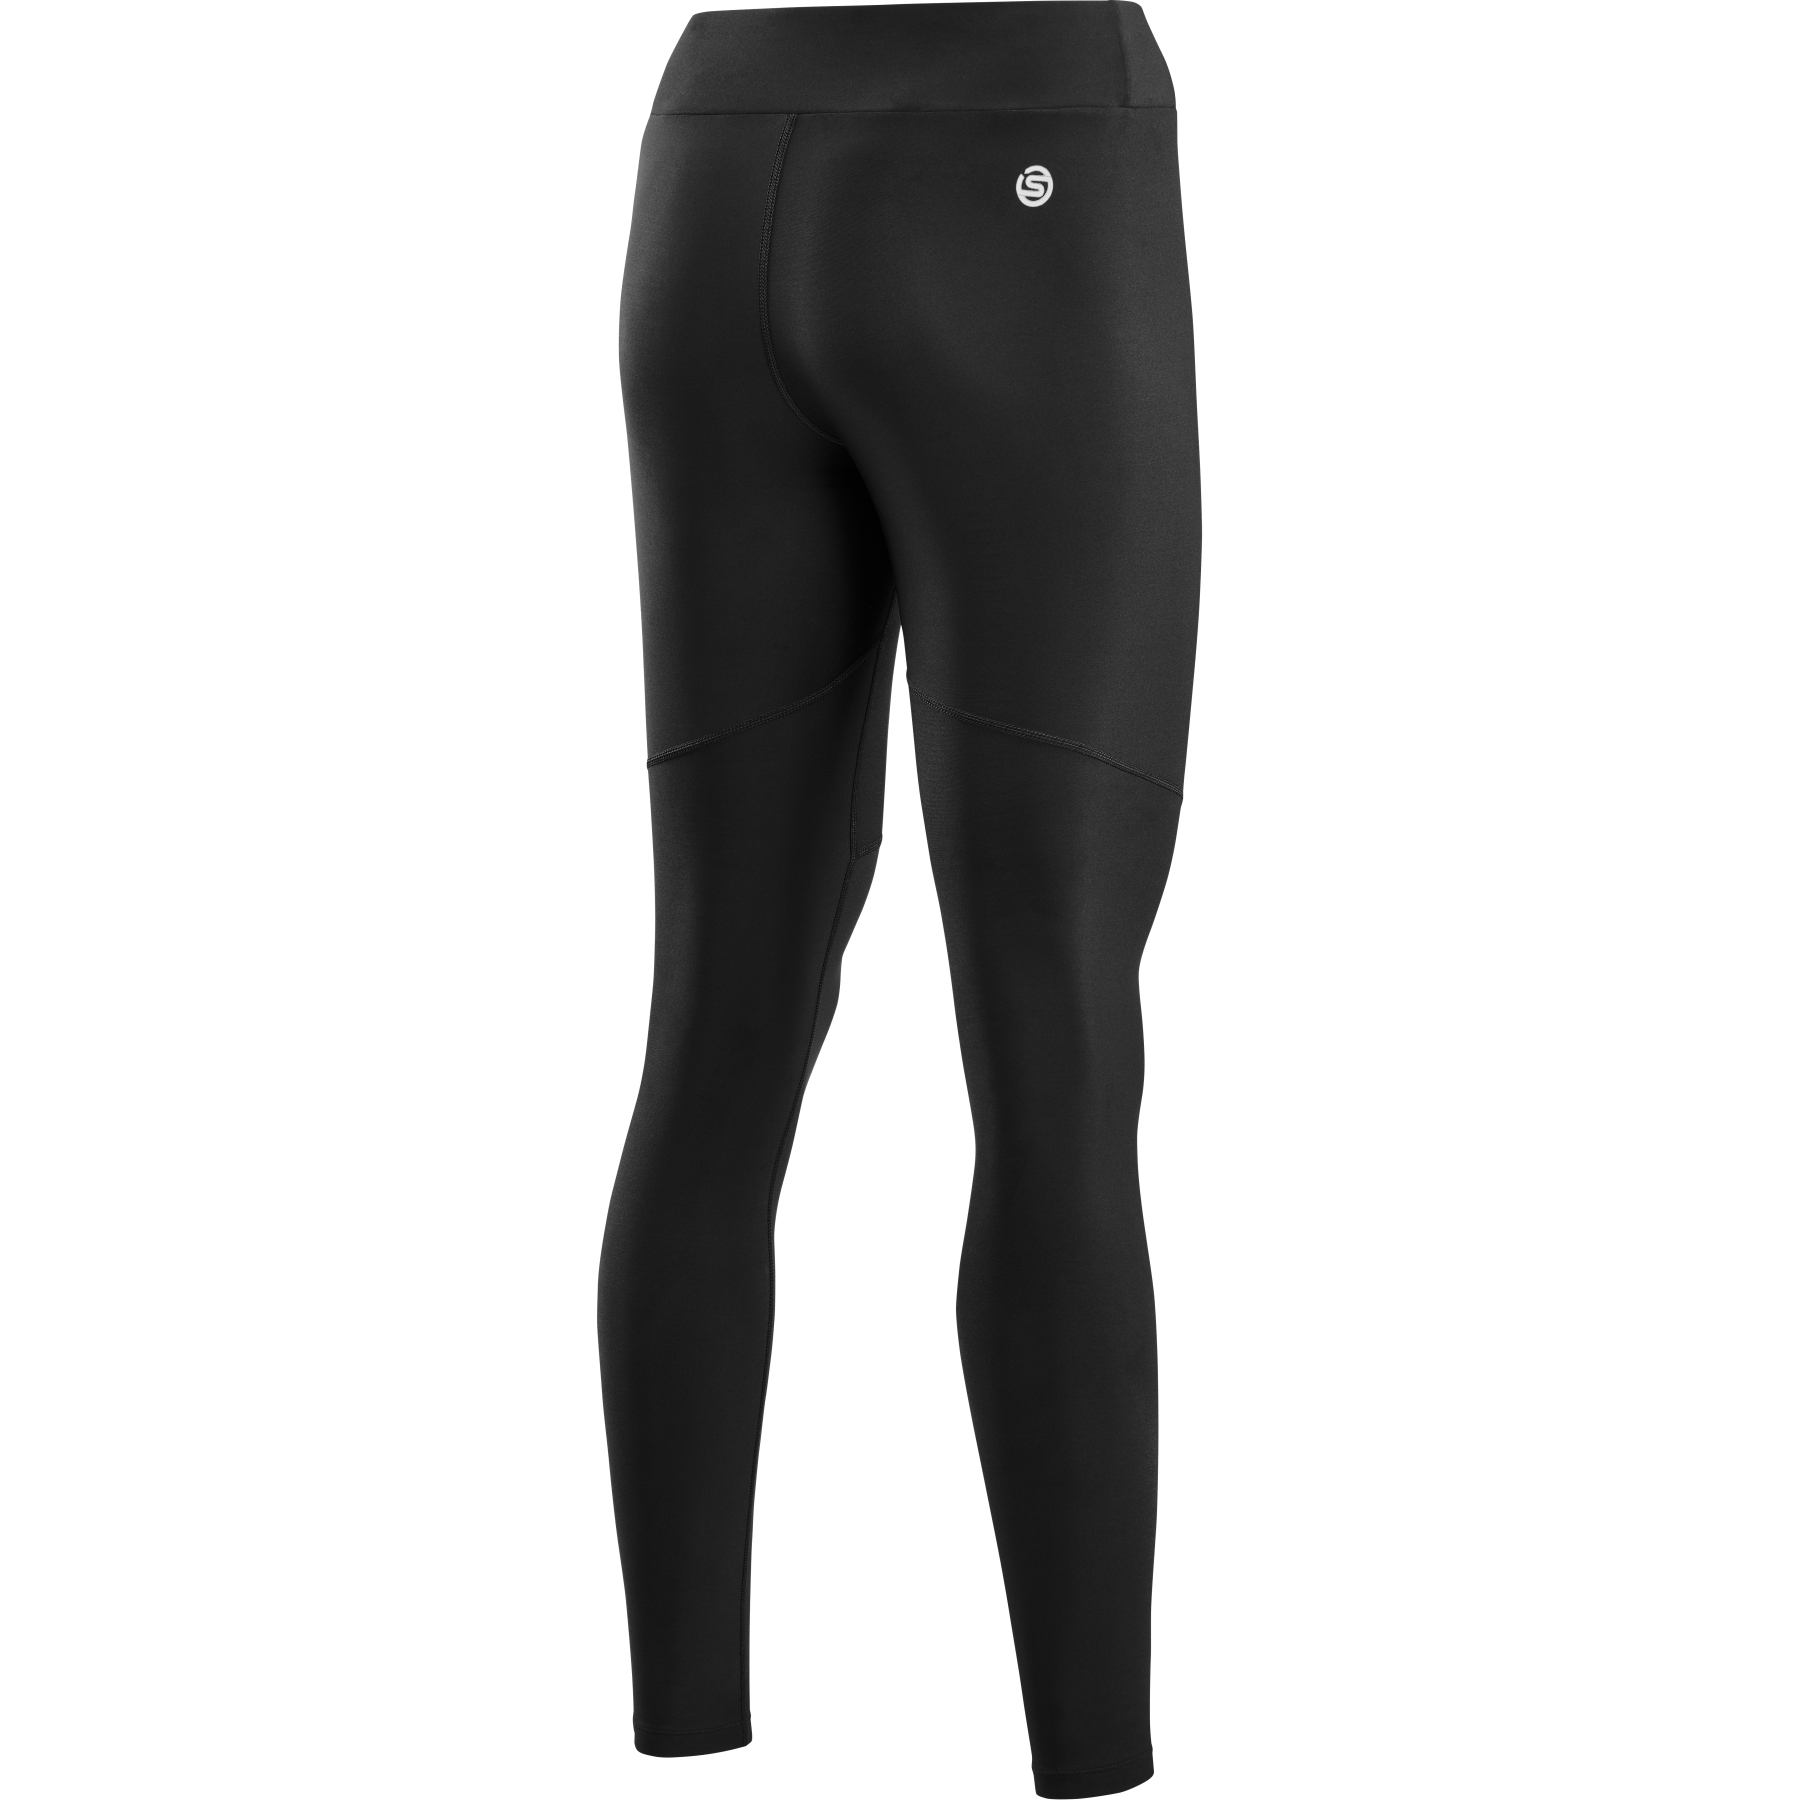 https://images.bike24.com/i/mb/a7/ac/f8/skins-compression-women-3-series-soft-long-tights-black-2-1131500.jpg